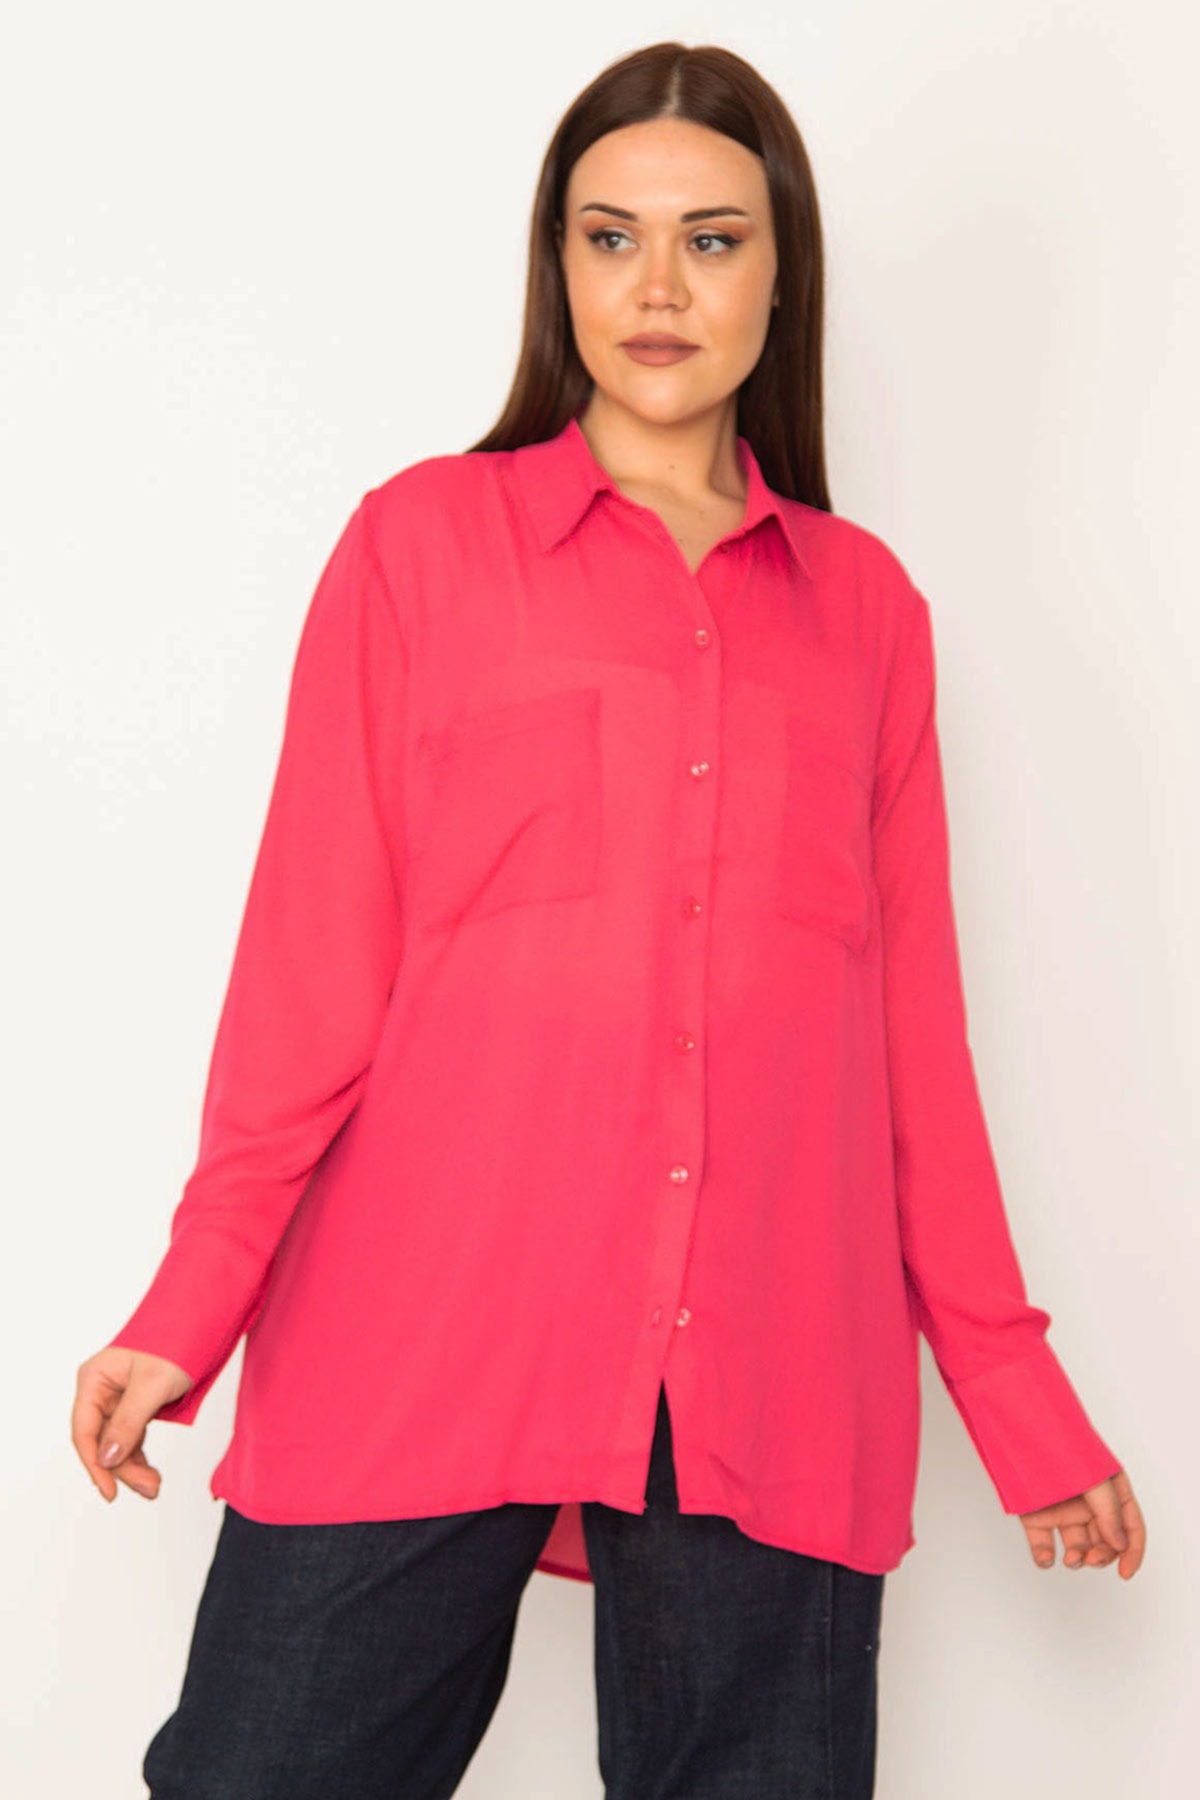 Şans Große Größen in Hemd Rosa Regular Fit Fast ausverkauft